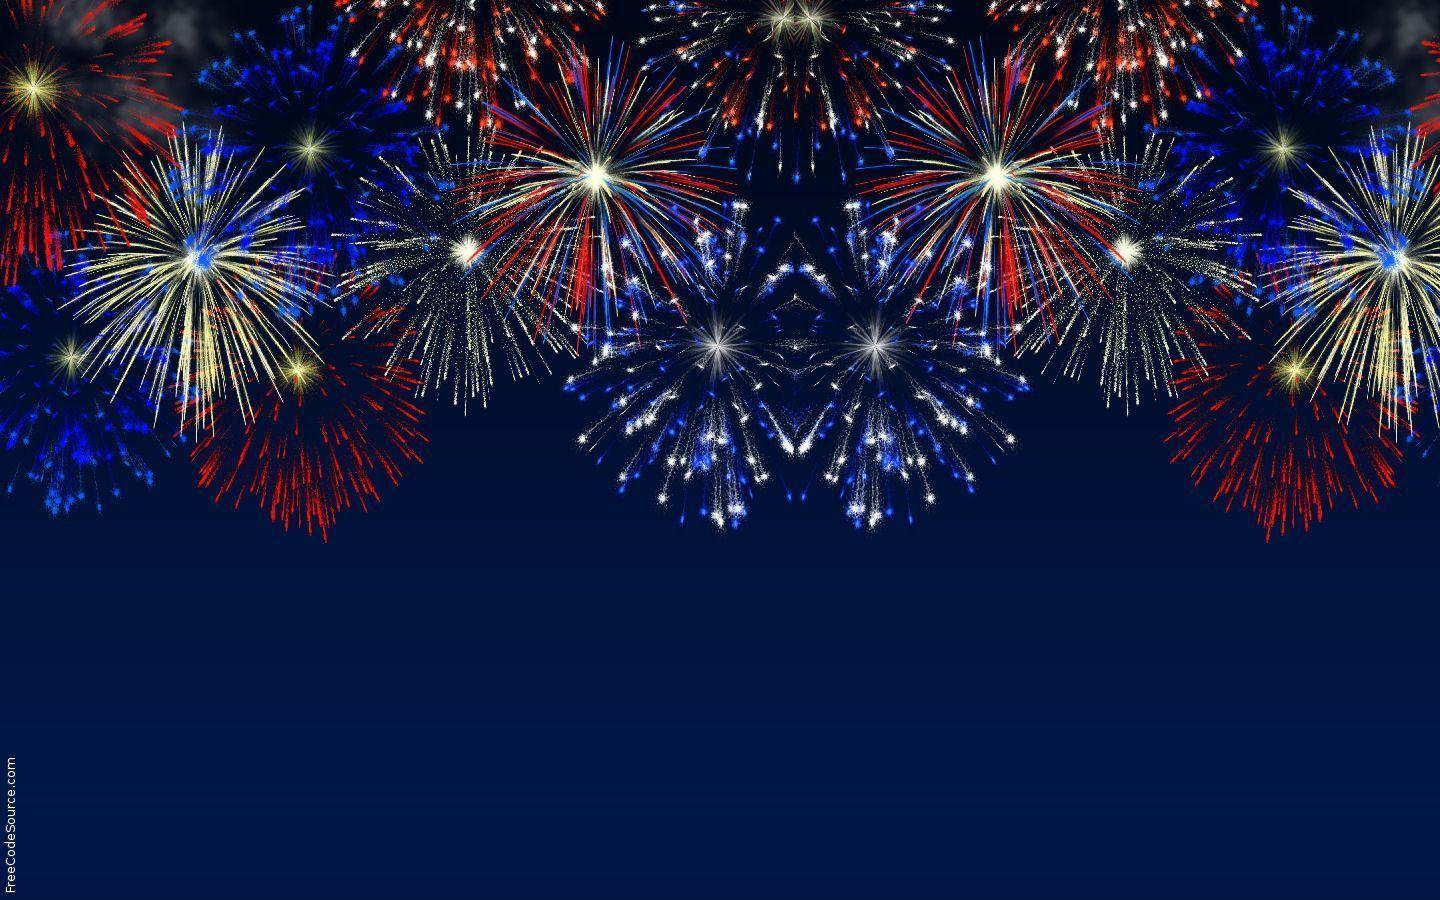 Fireworks Background